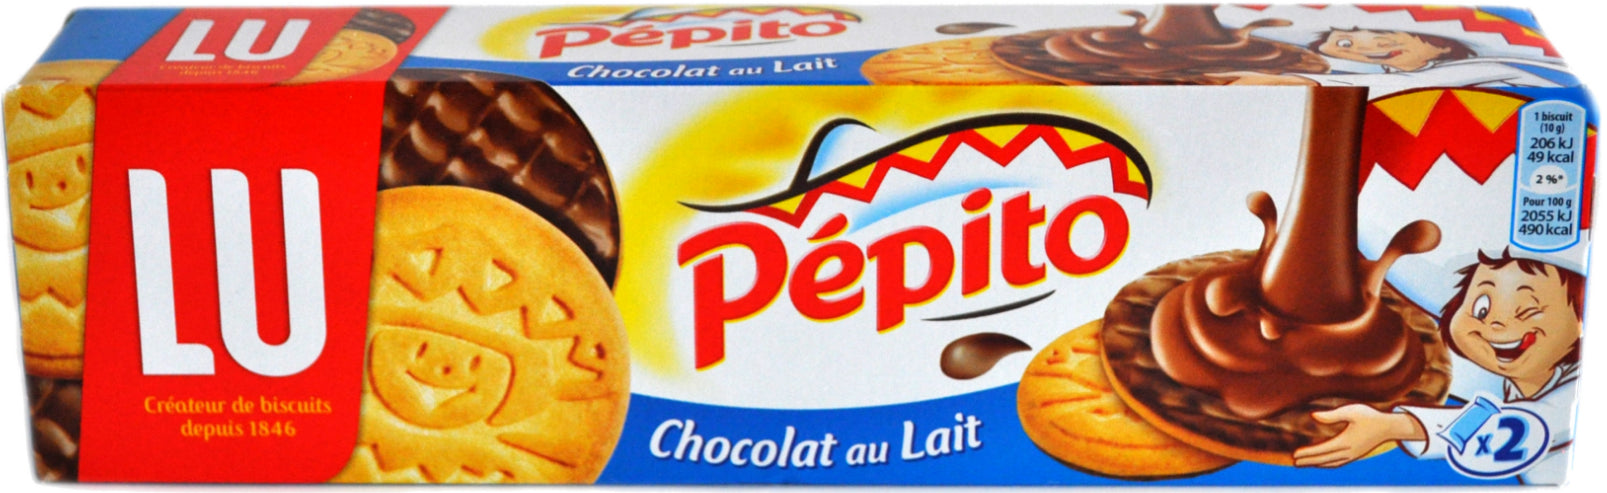 Pepito Lu Milk Chocolate Biscuits 200g